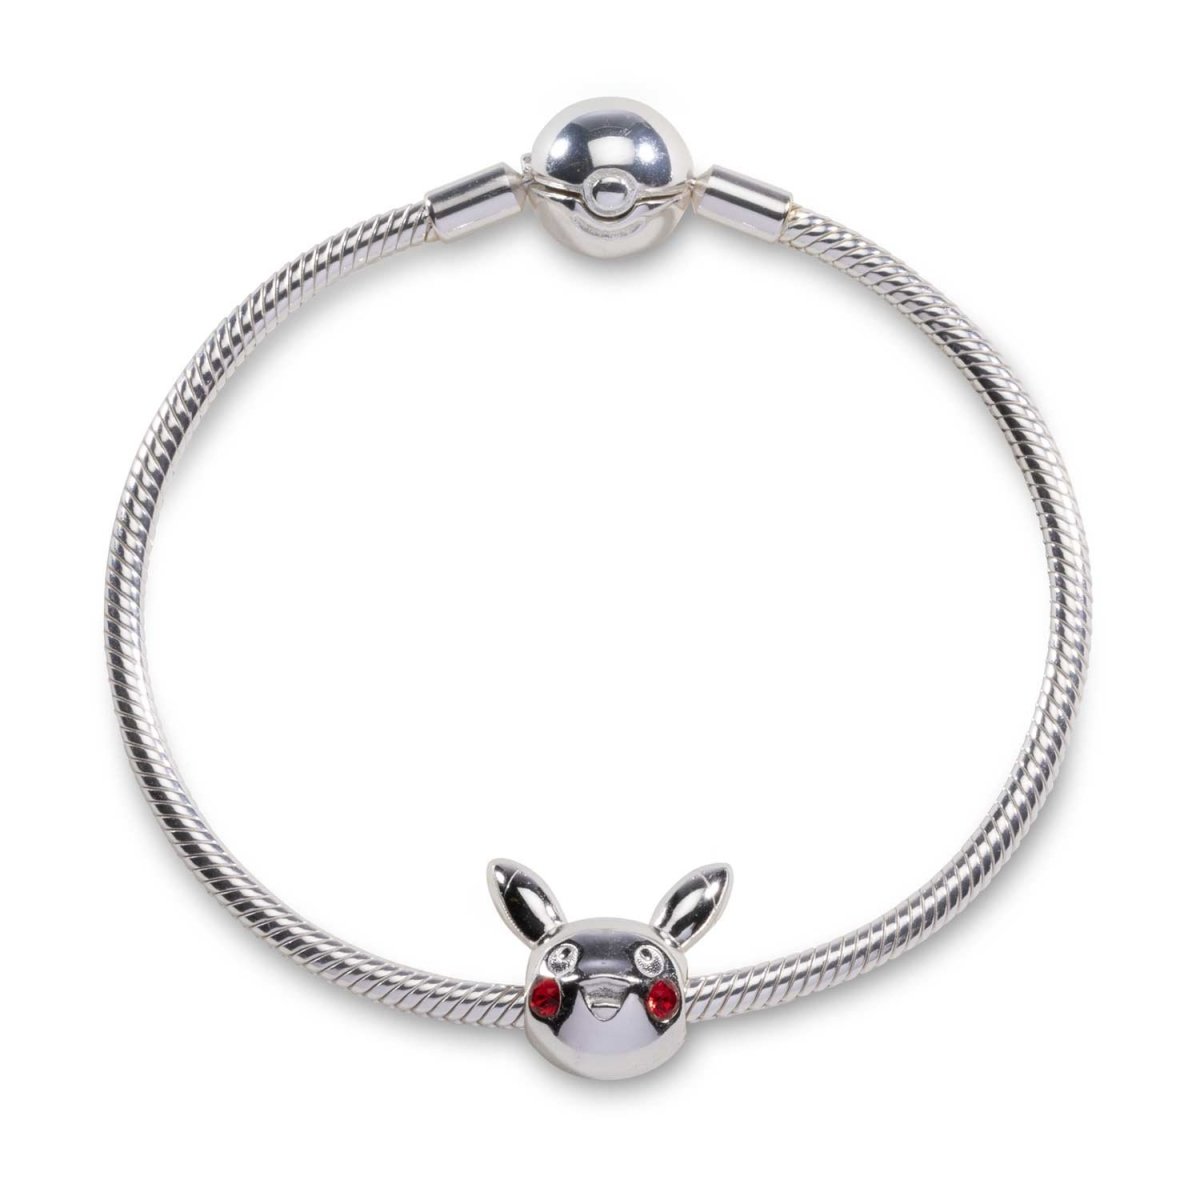 Pokémon Jewelry - Charms: Charizard Sterling Silver Dangle Charm